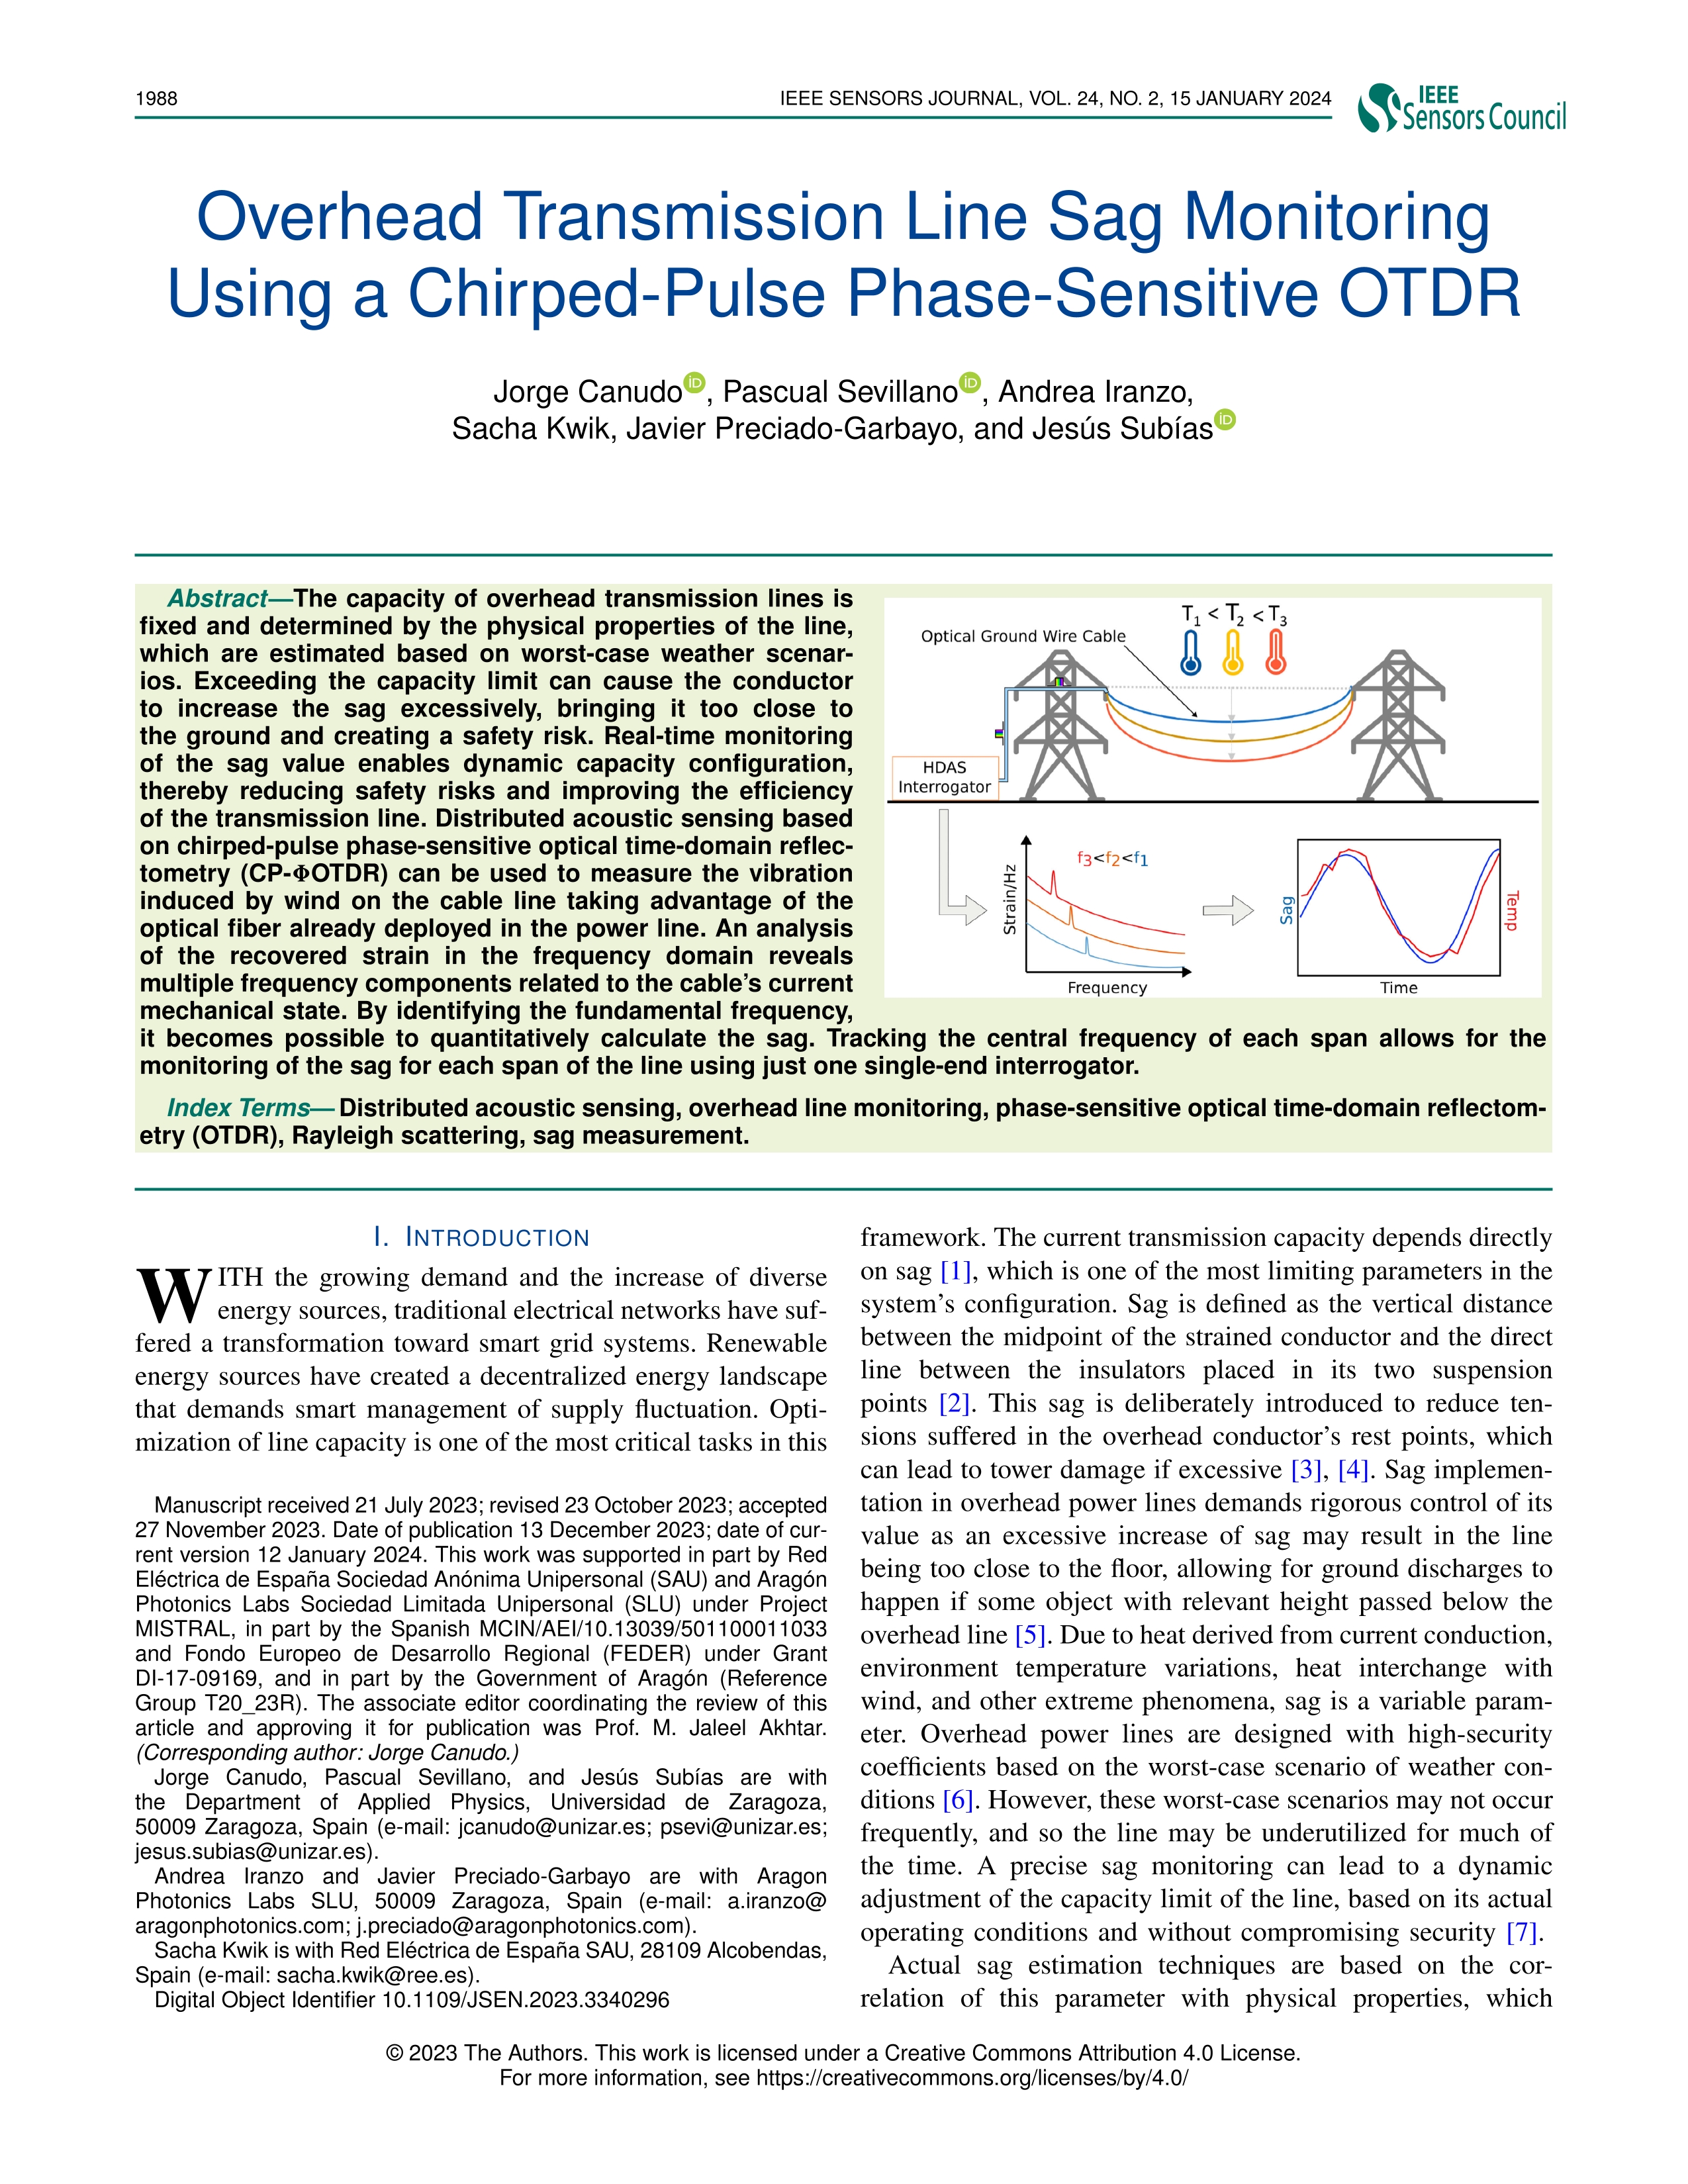 Overhead transmission line sag monitoring using a chirped-pulse phase-sensitive OTDR